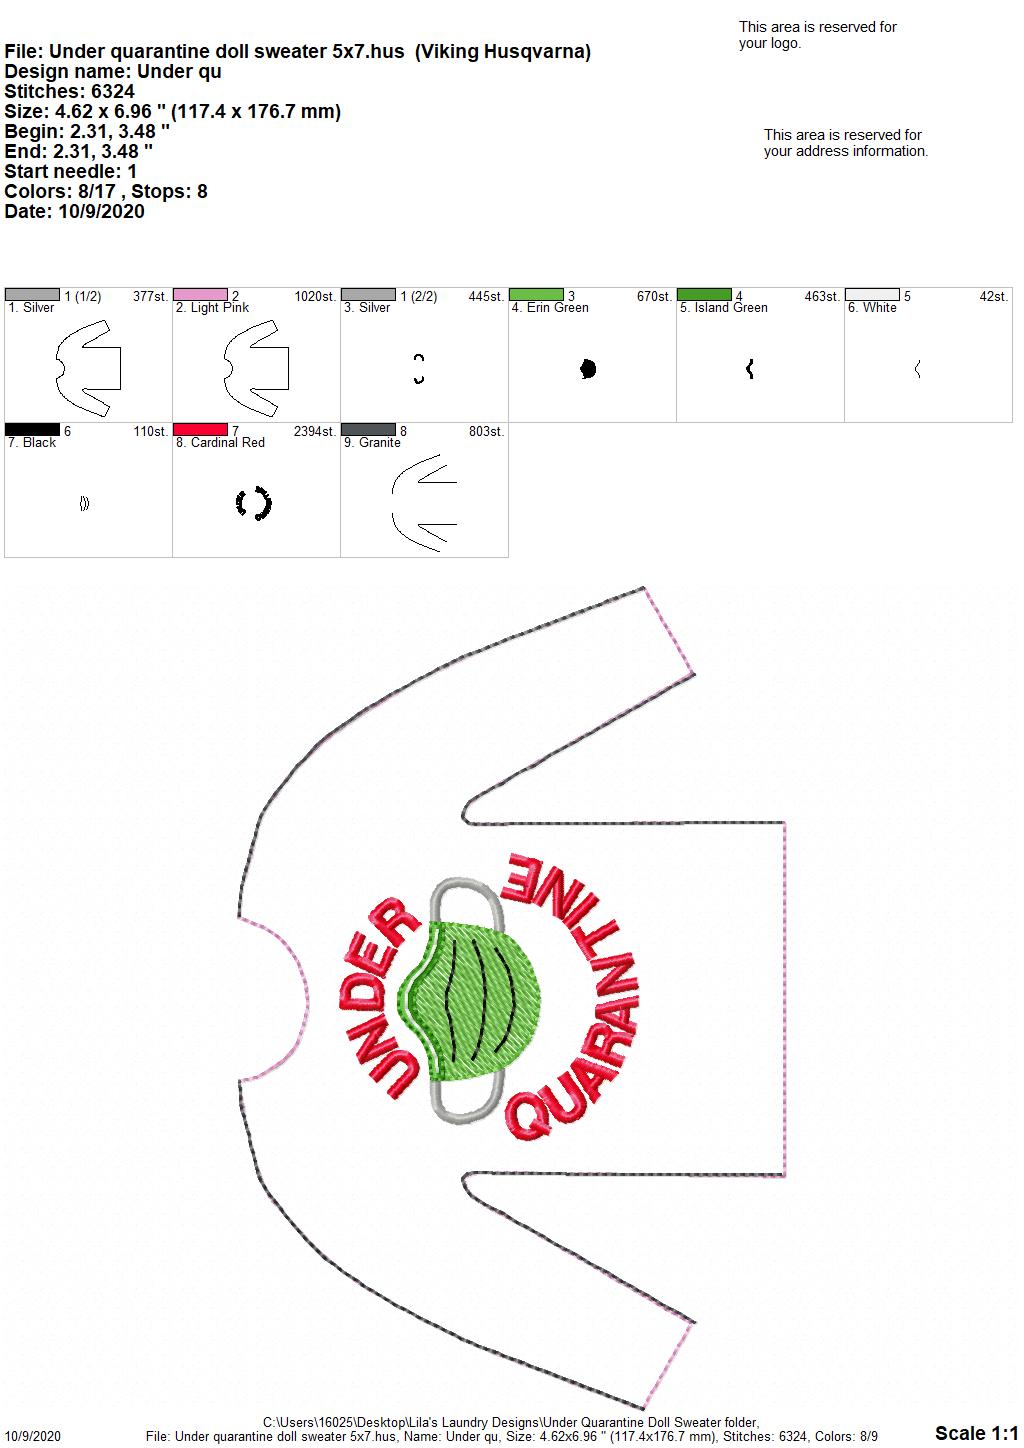 Under Quarantine Doll Sweater 5x7 - Digital Embroidery Design